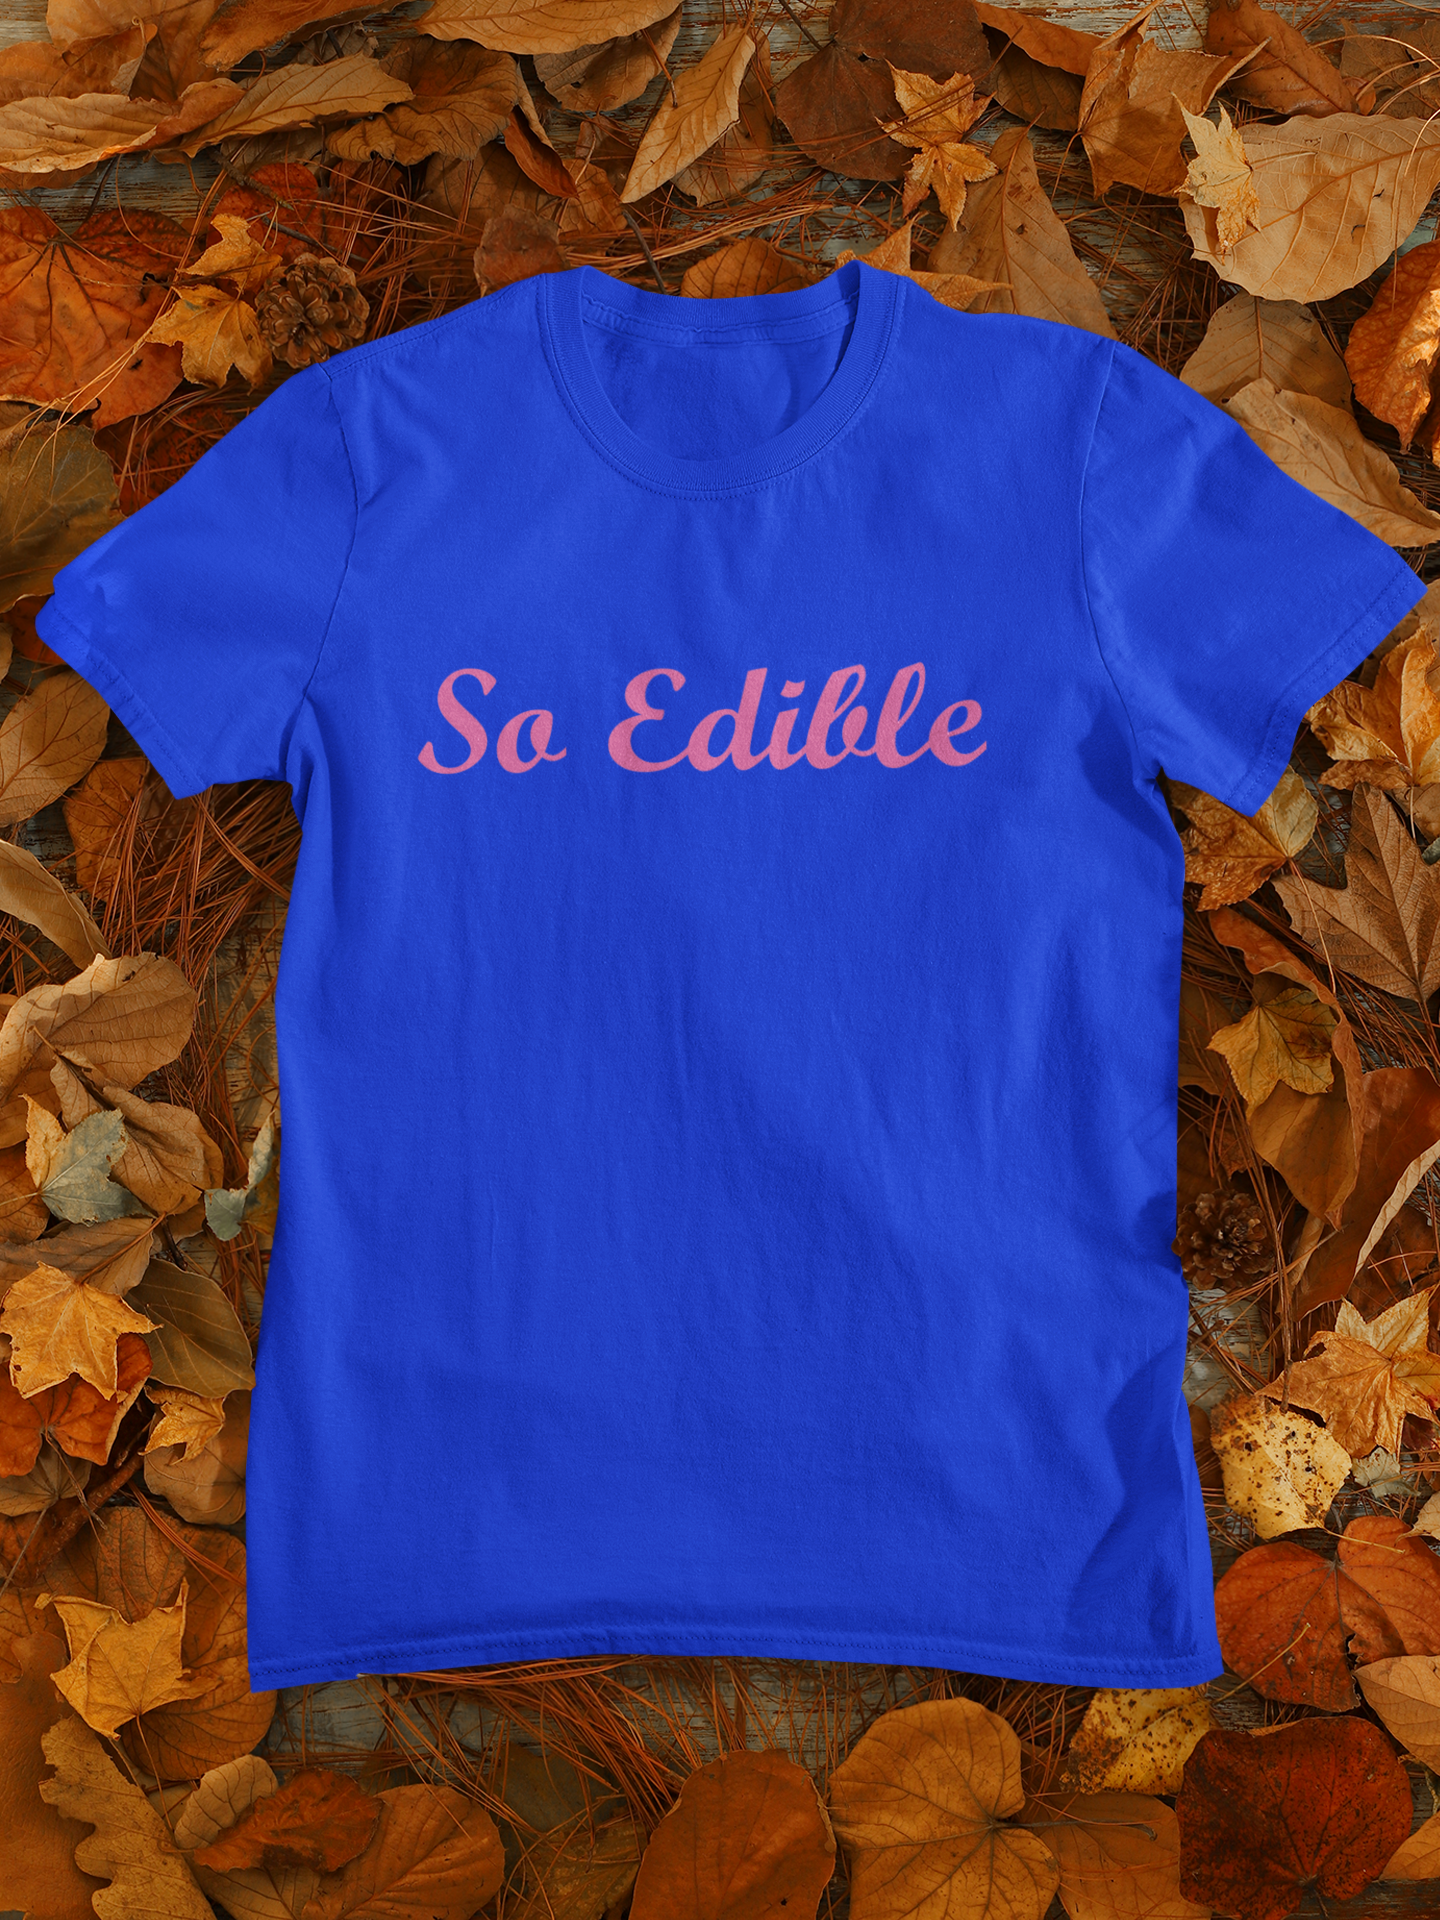 So Edible' Printed Adult Unisex Short Sleeve T-shirt